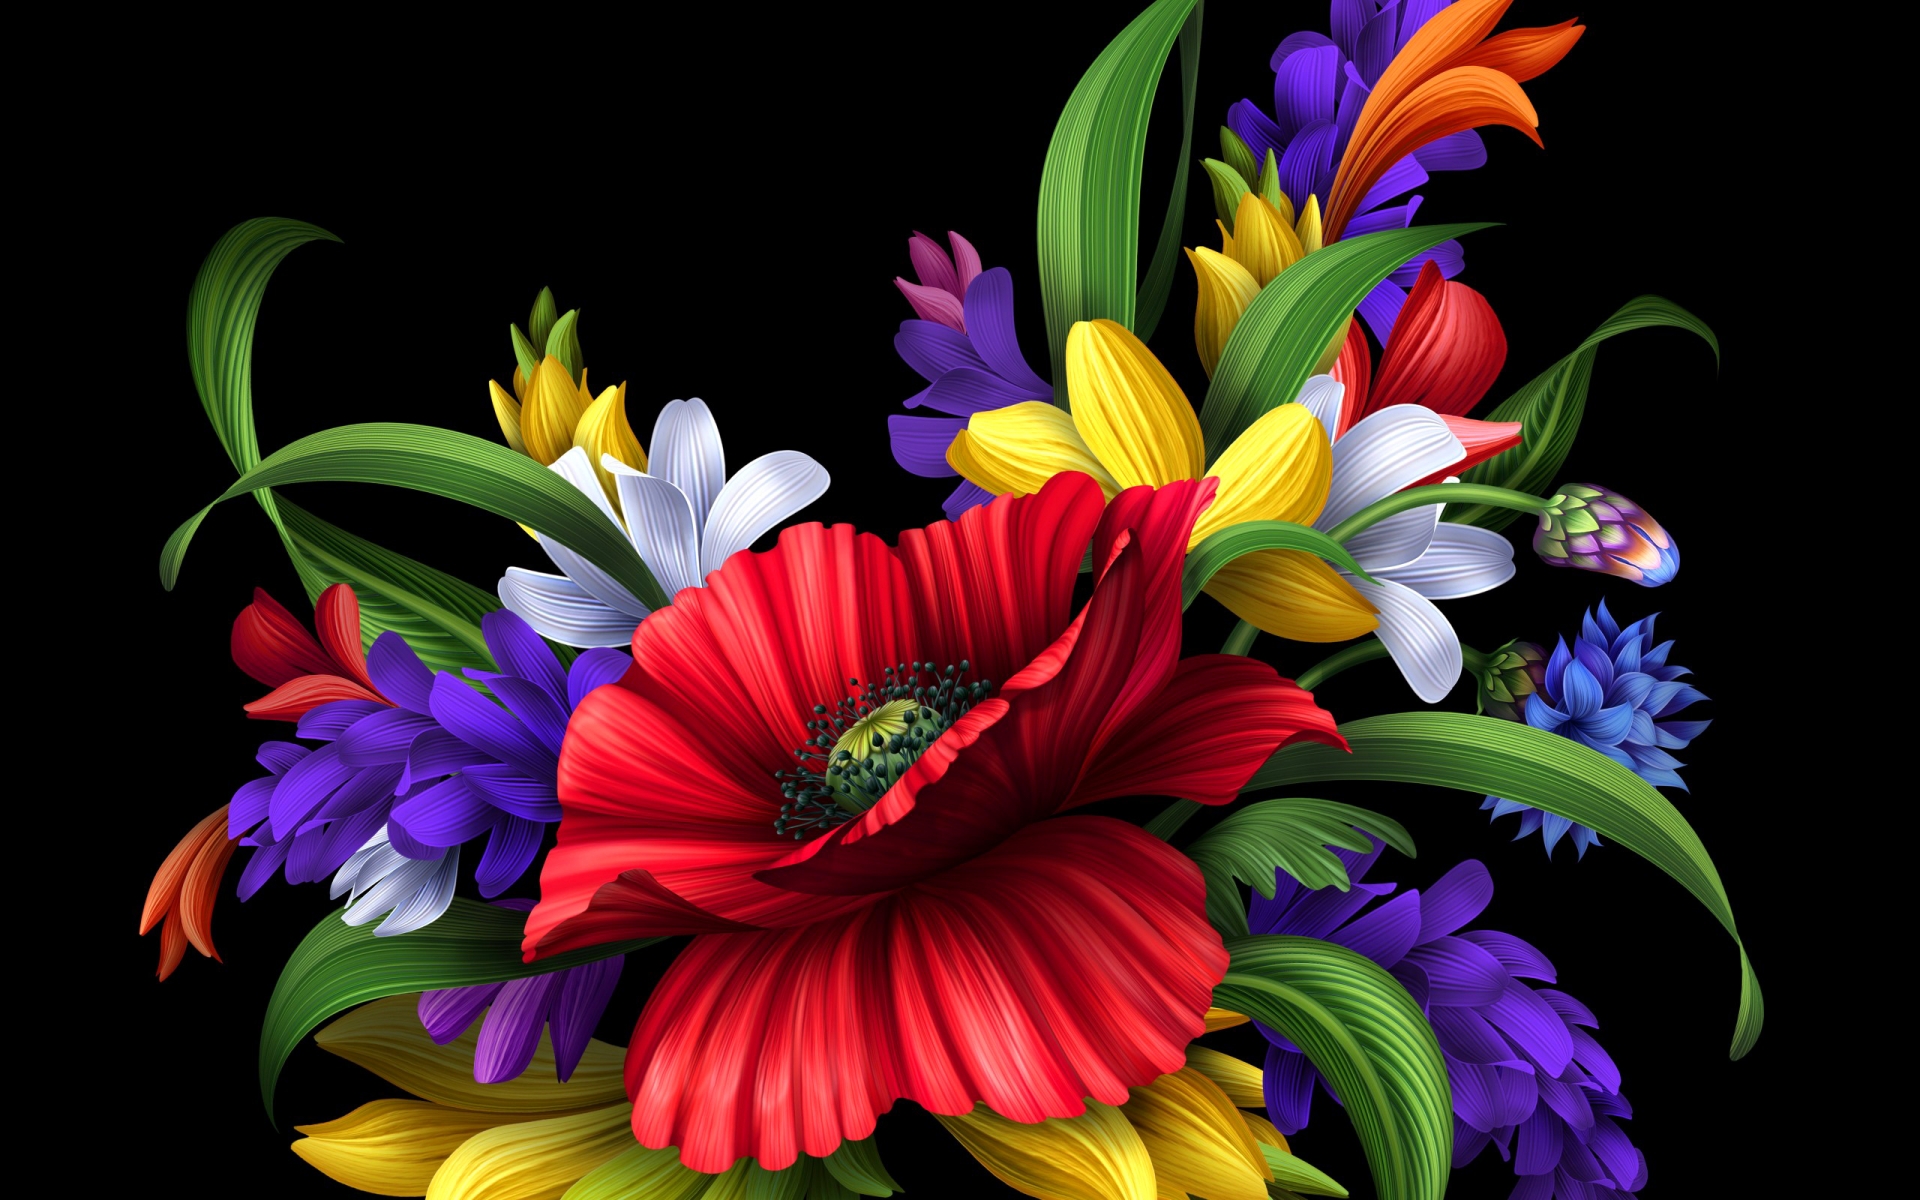 Special Flower Bouquet for 1920 x 1200 widescreen resolution